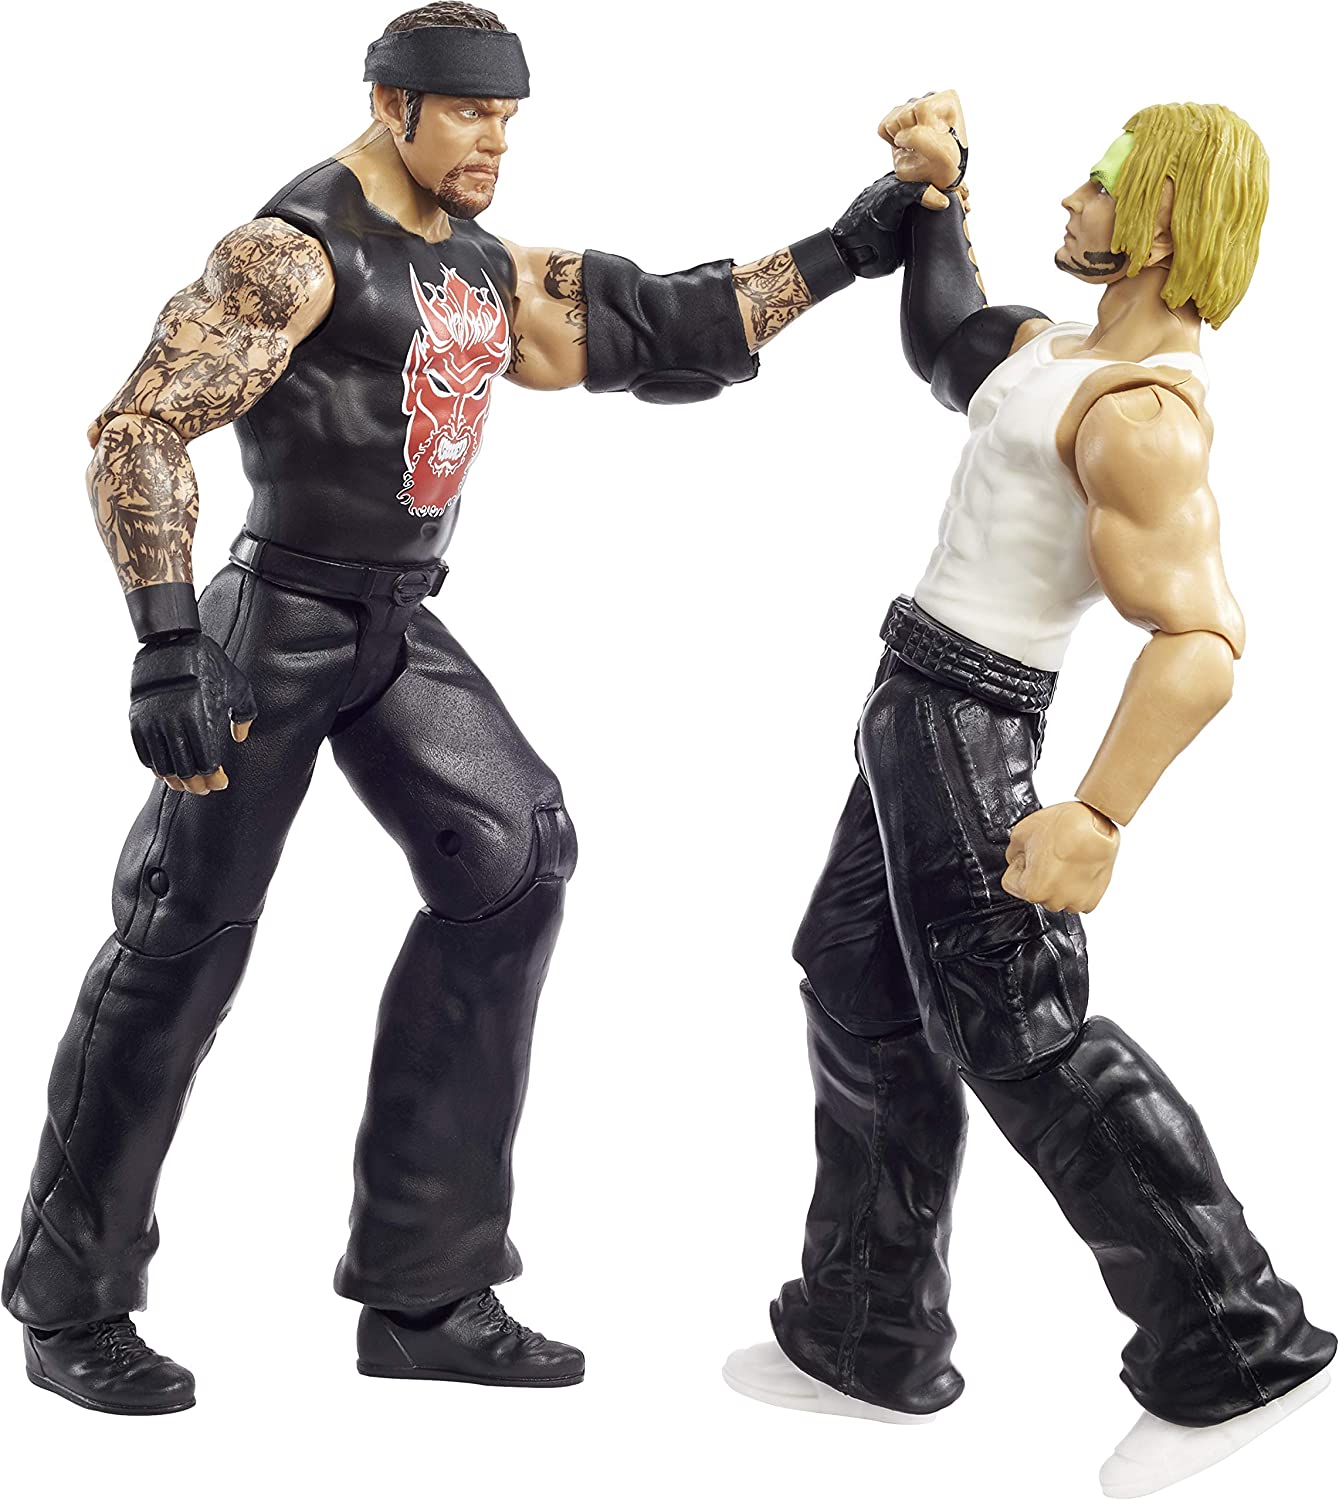 2020 WWE Mattel Basic Championship Showdown Series 1 Undertaker vs. Jeff Hardy